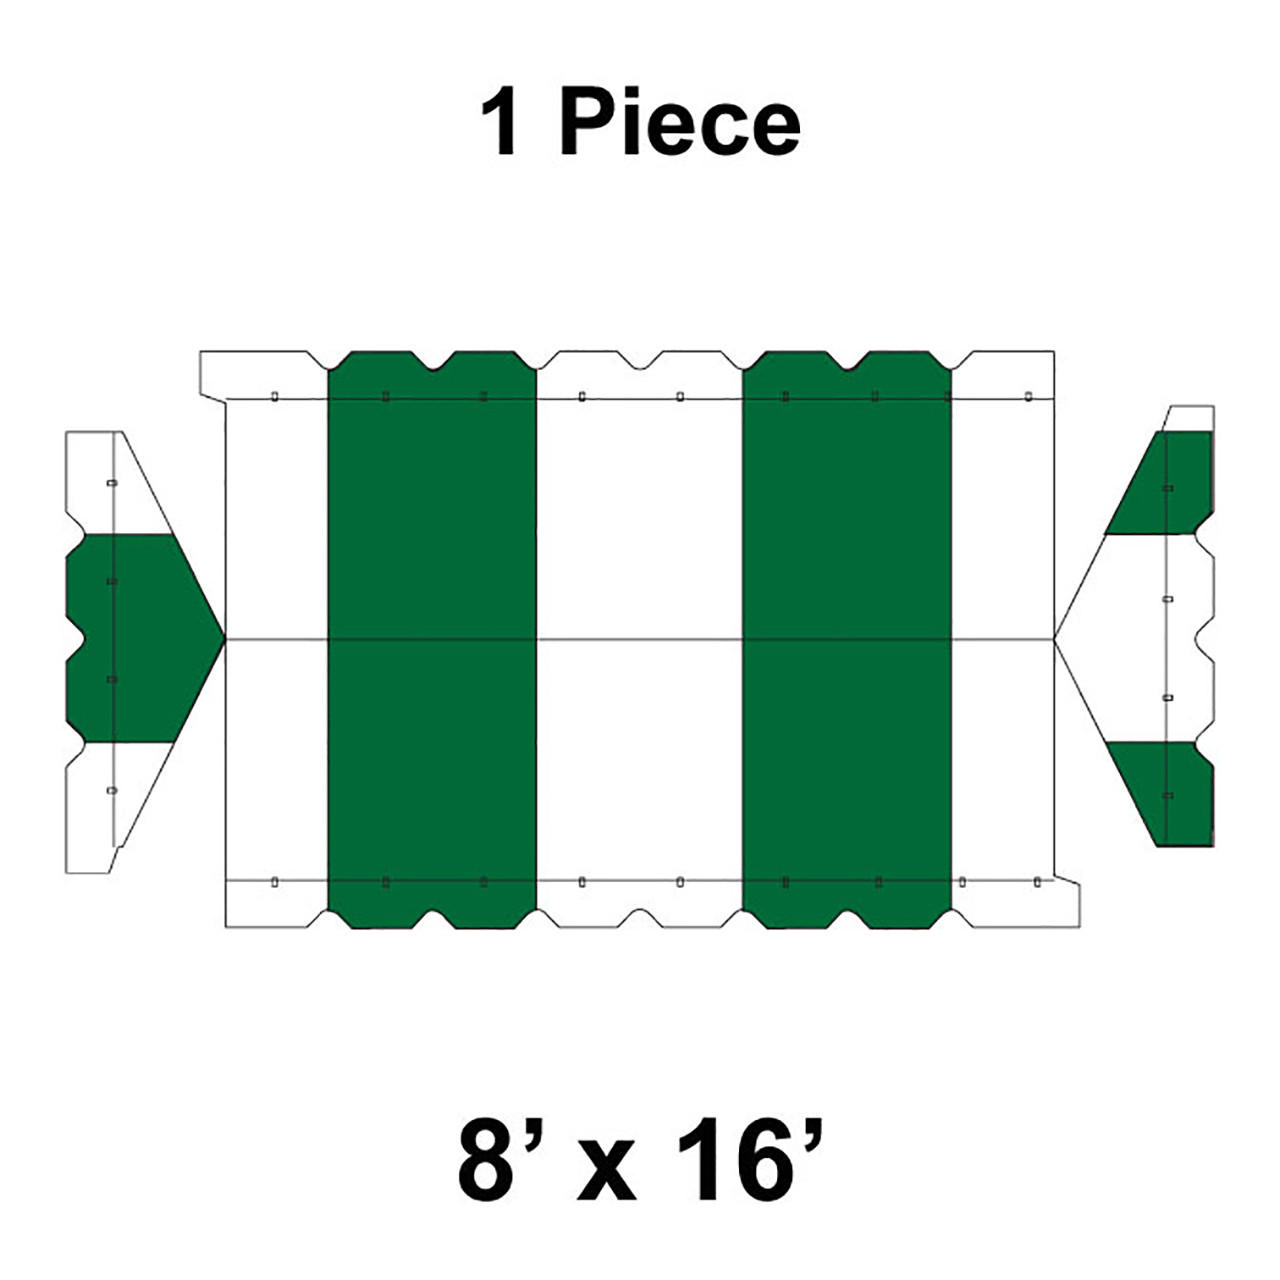 8' x 16' Gable Frame Tent, 1 Piece, 16 oz. Ratchet Top Replacement